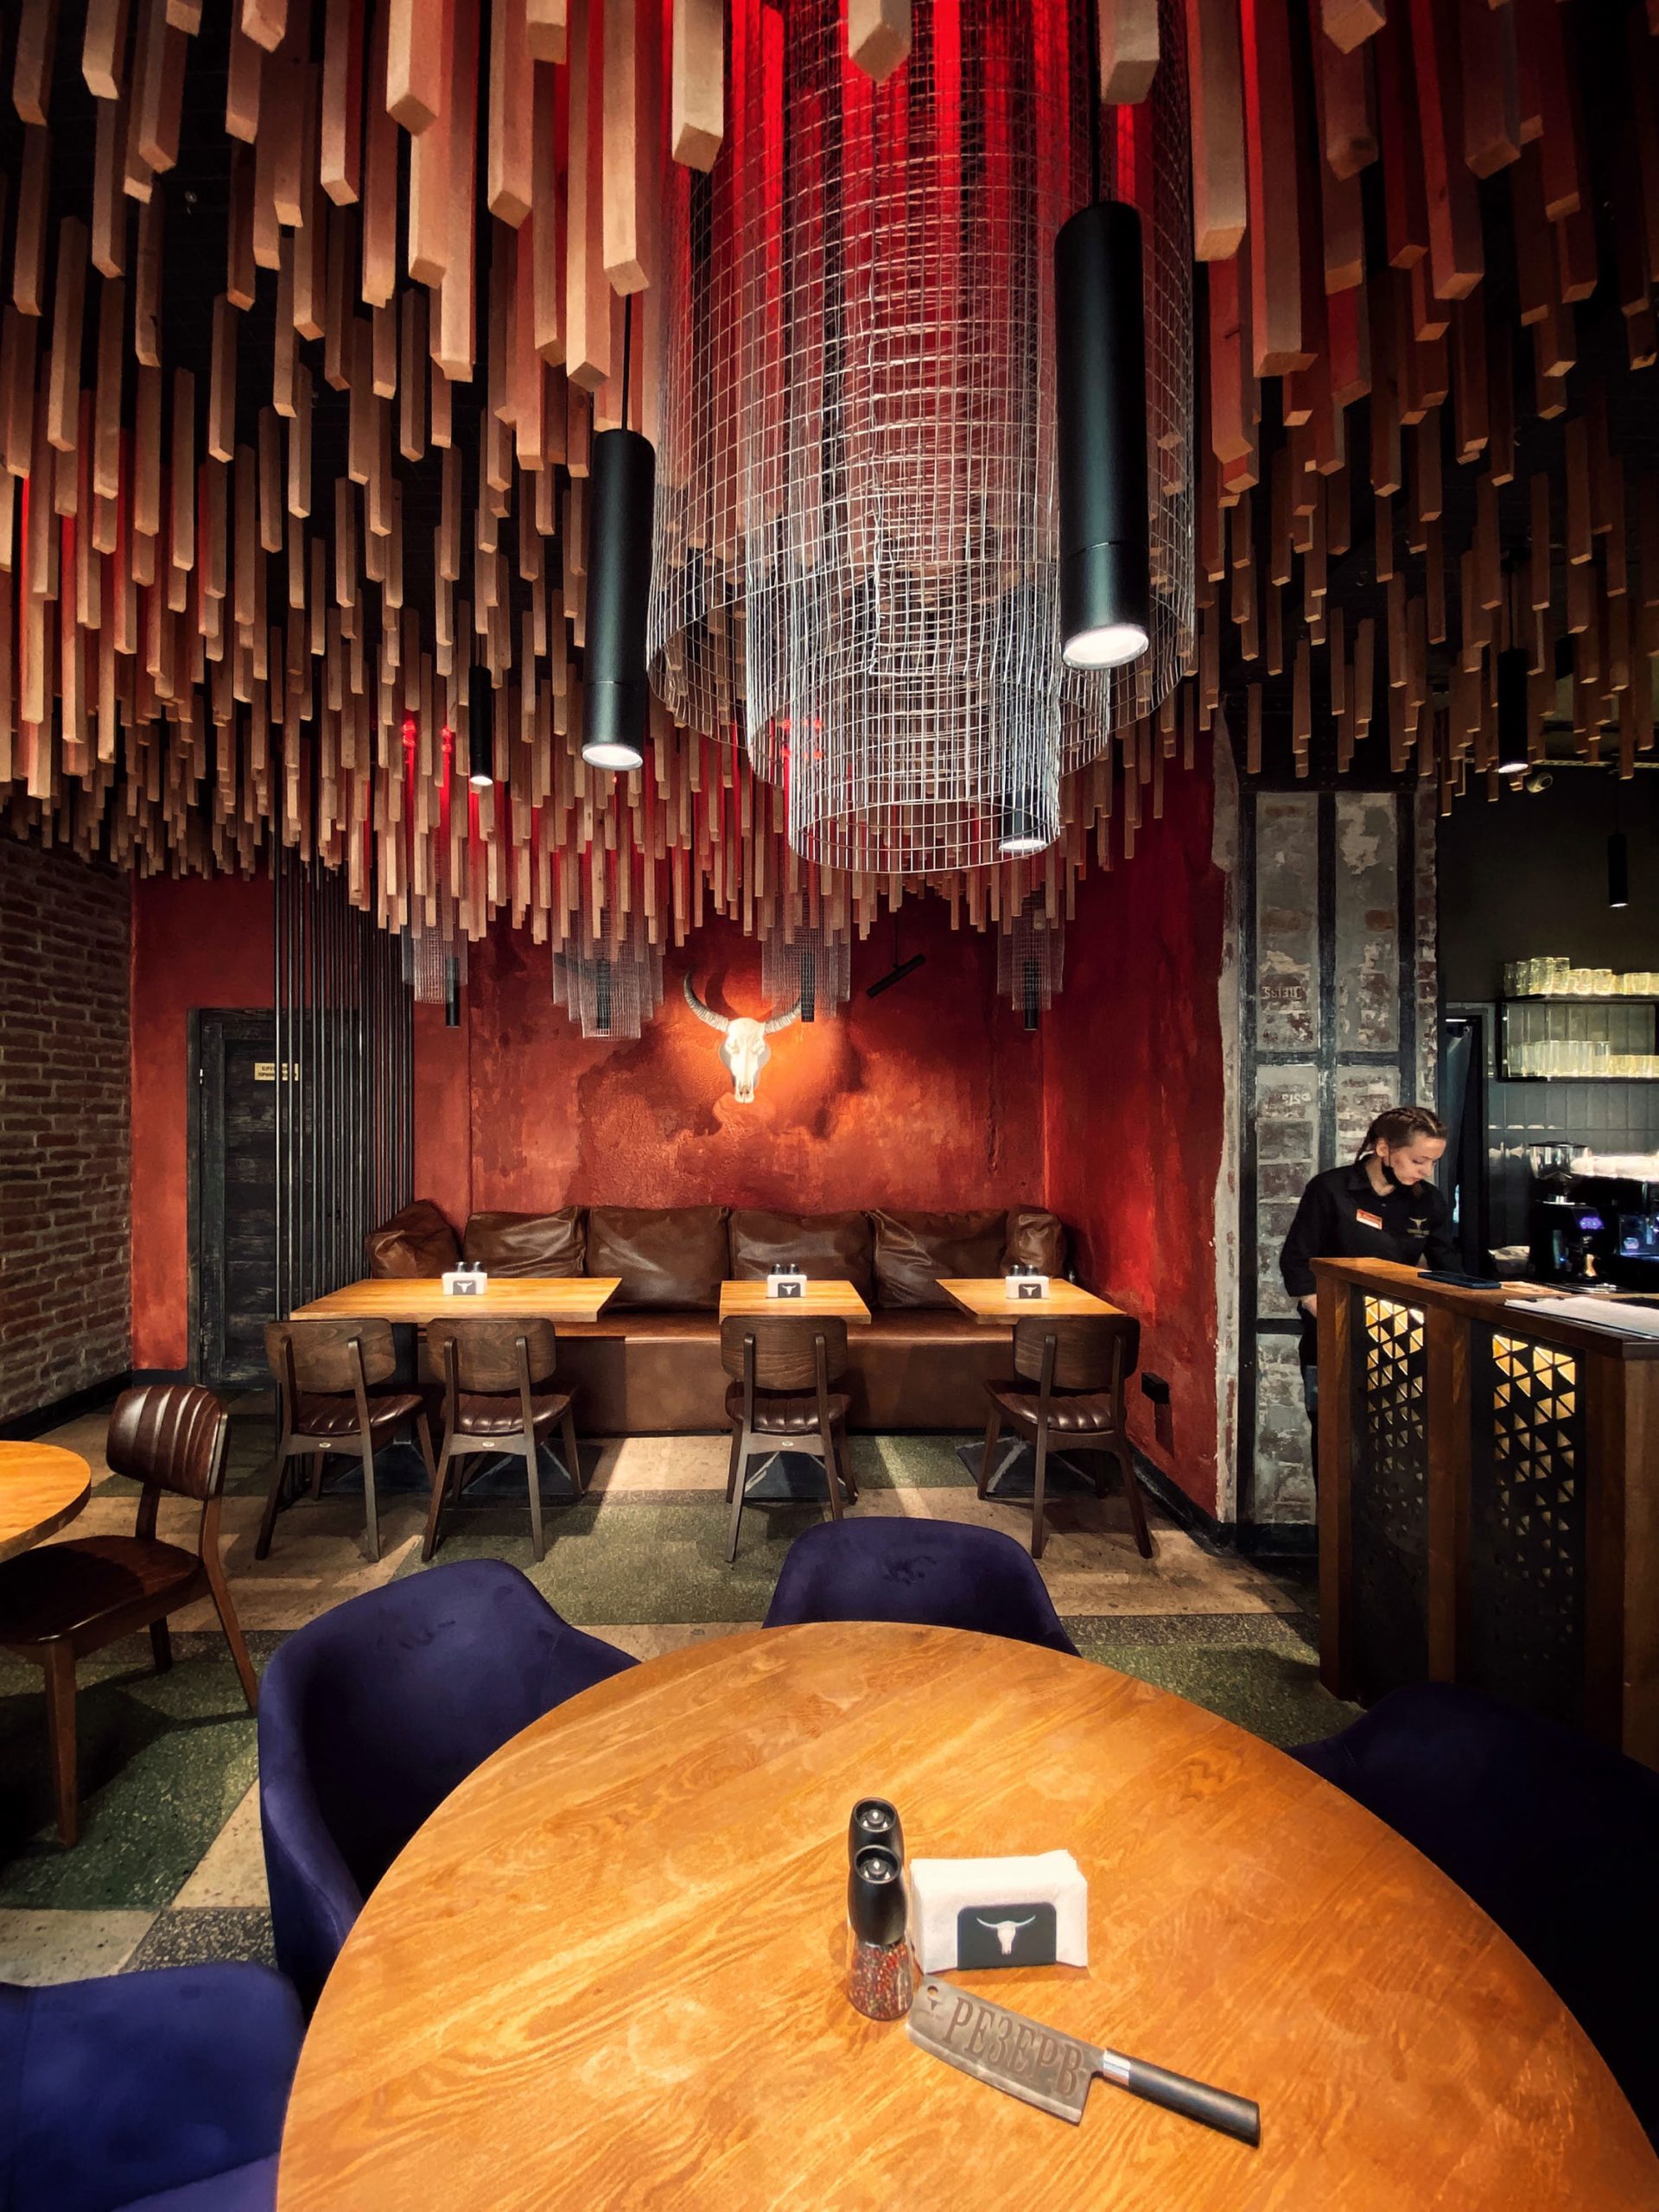 Smoked_BBQ_restaurant_interior_design (23)